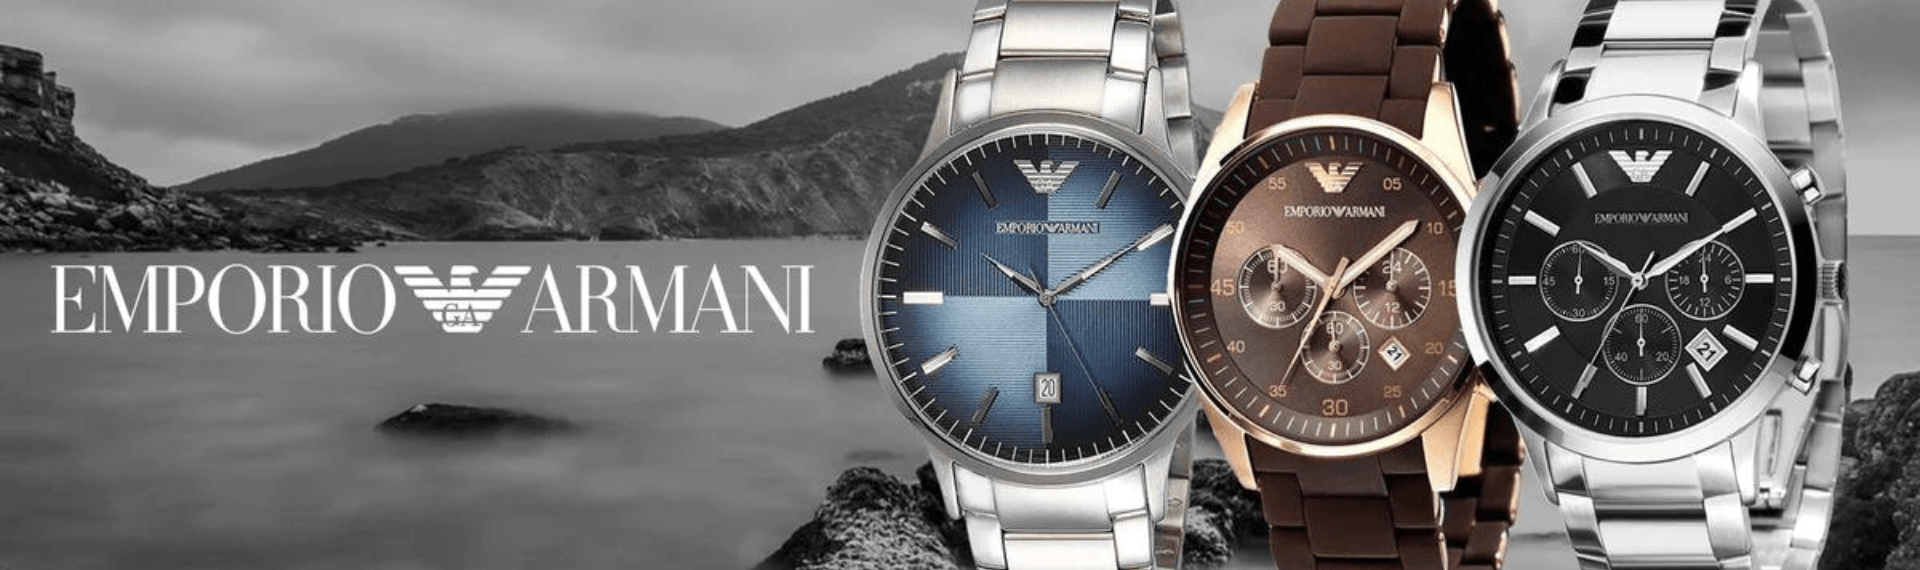 Buy Original Emporio Armani Classic Watches